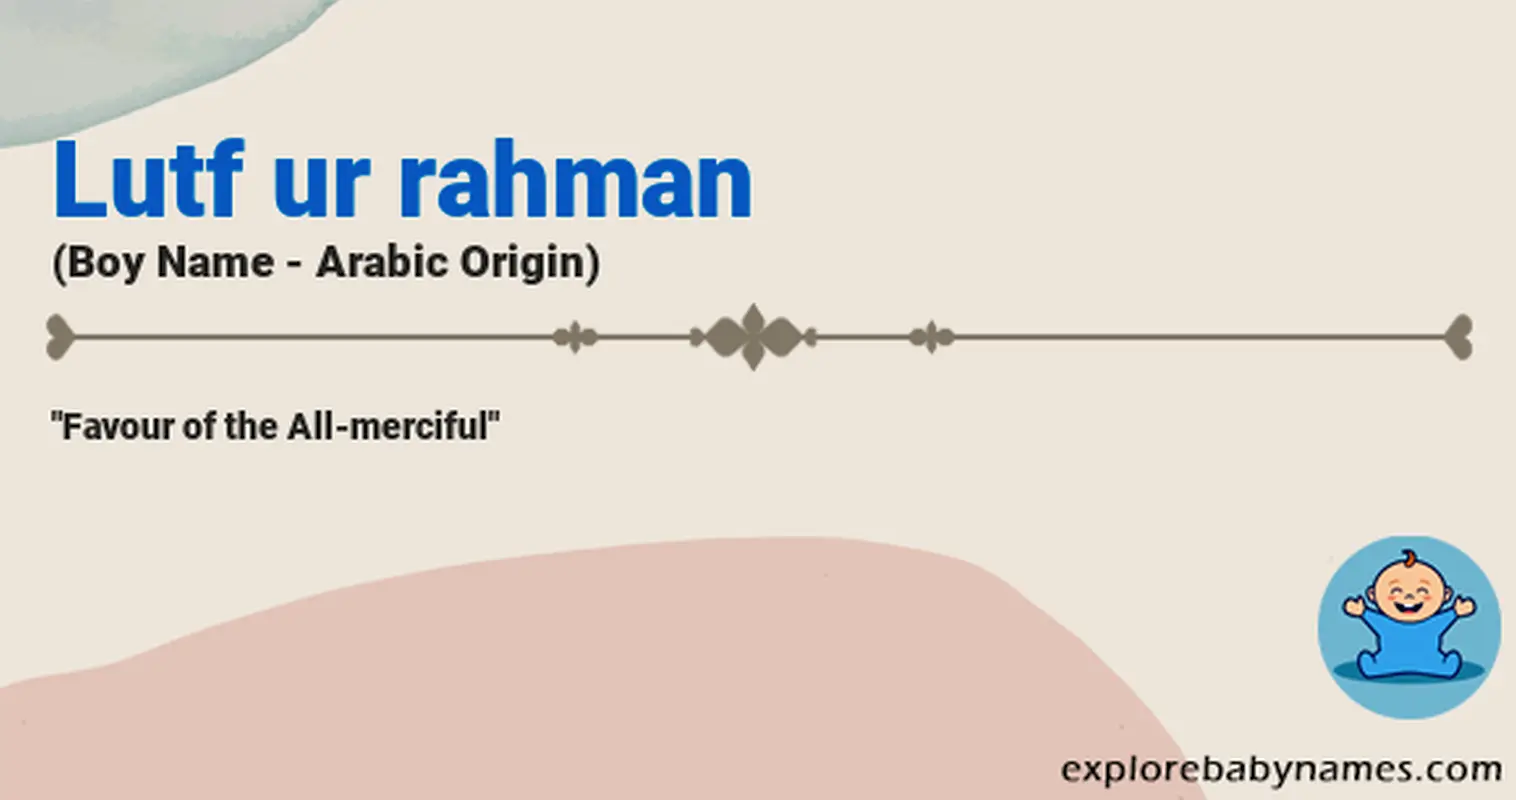 Meaning of Lutf ur rahman